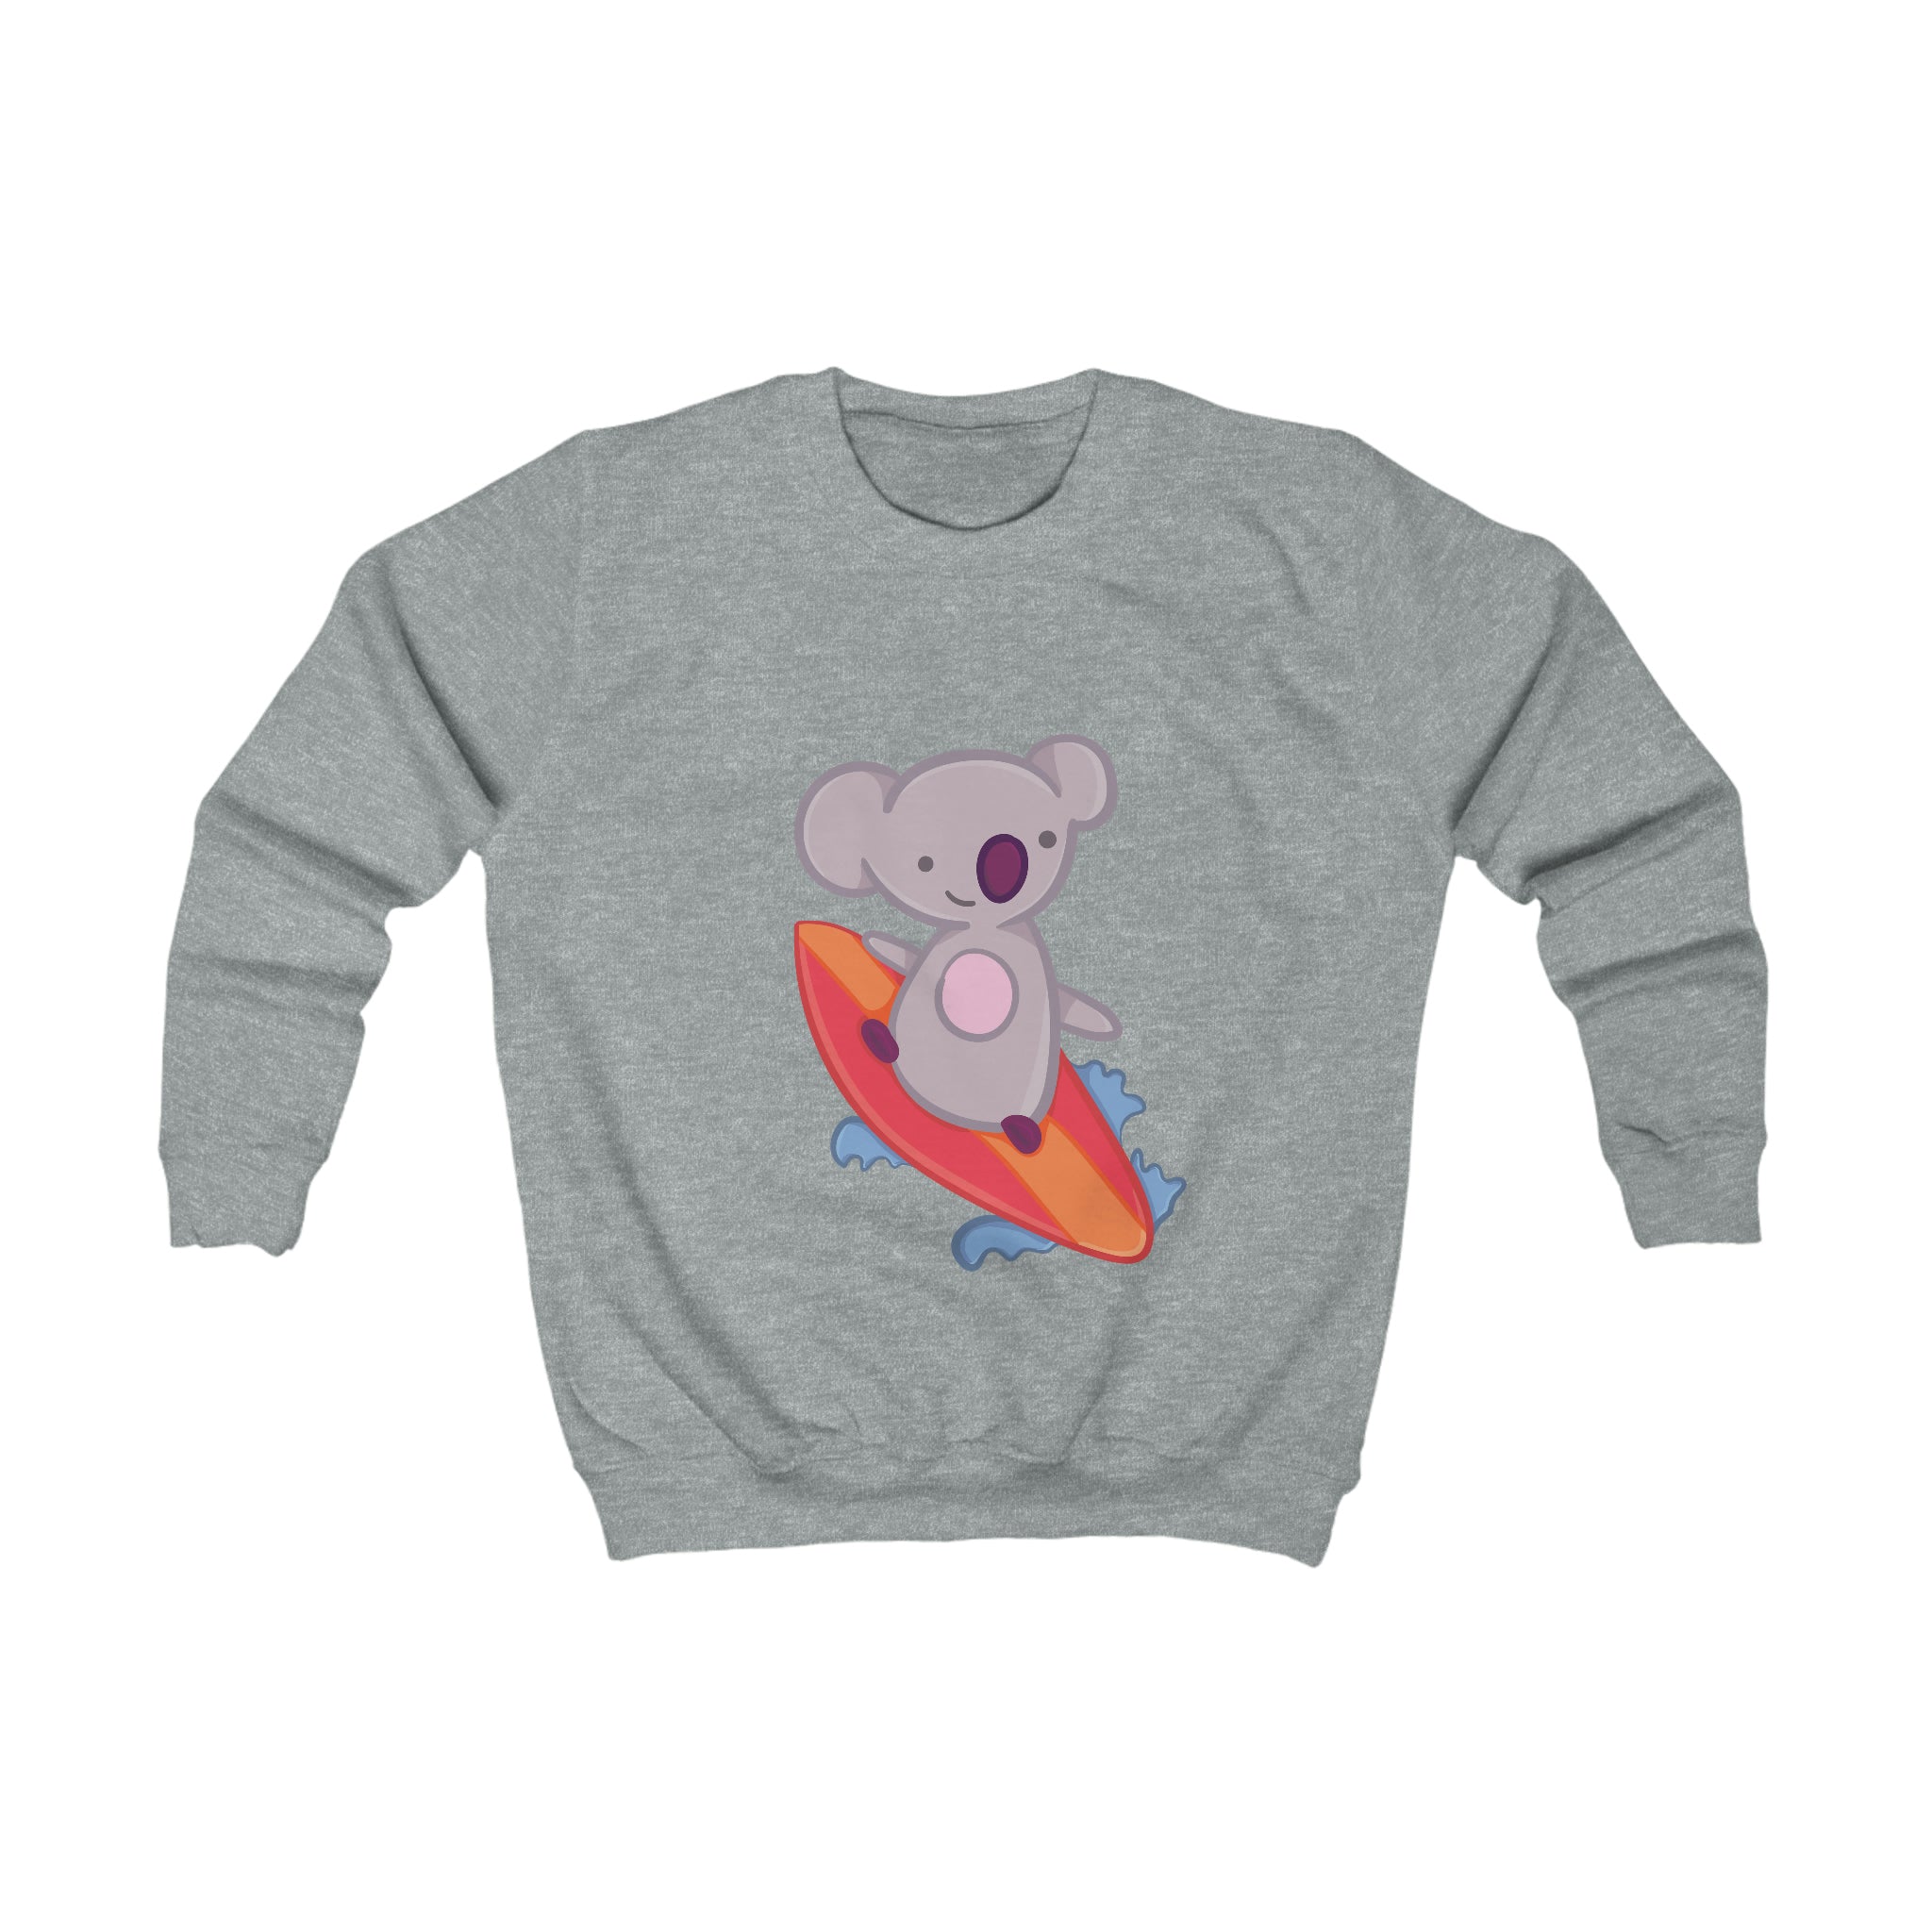 Kids Playful Sufer Koala Graphic Crewneck Sweater